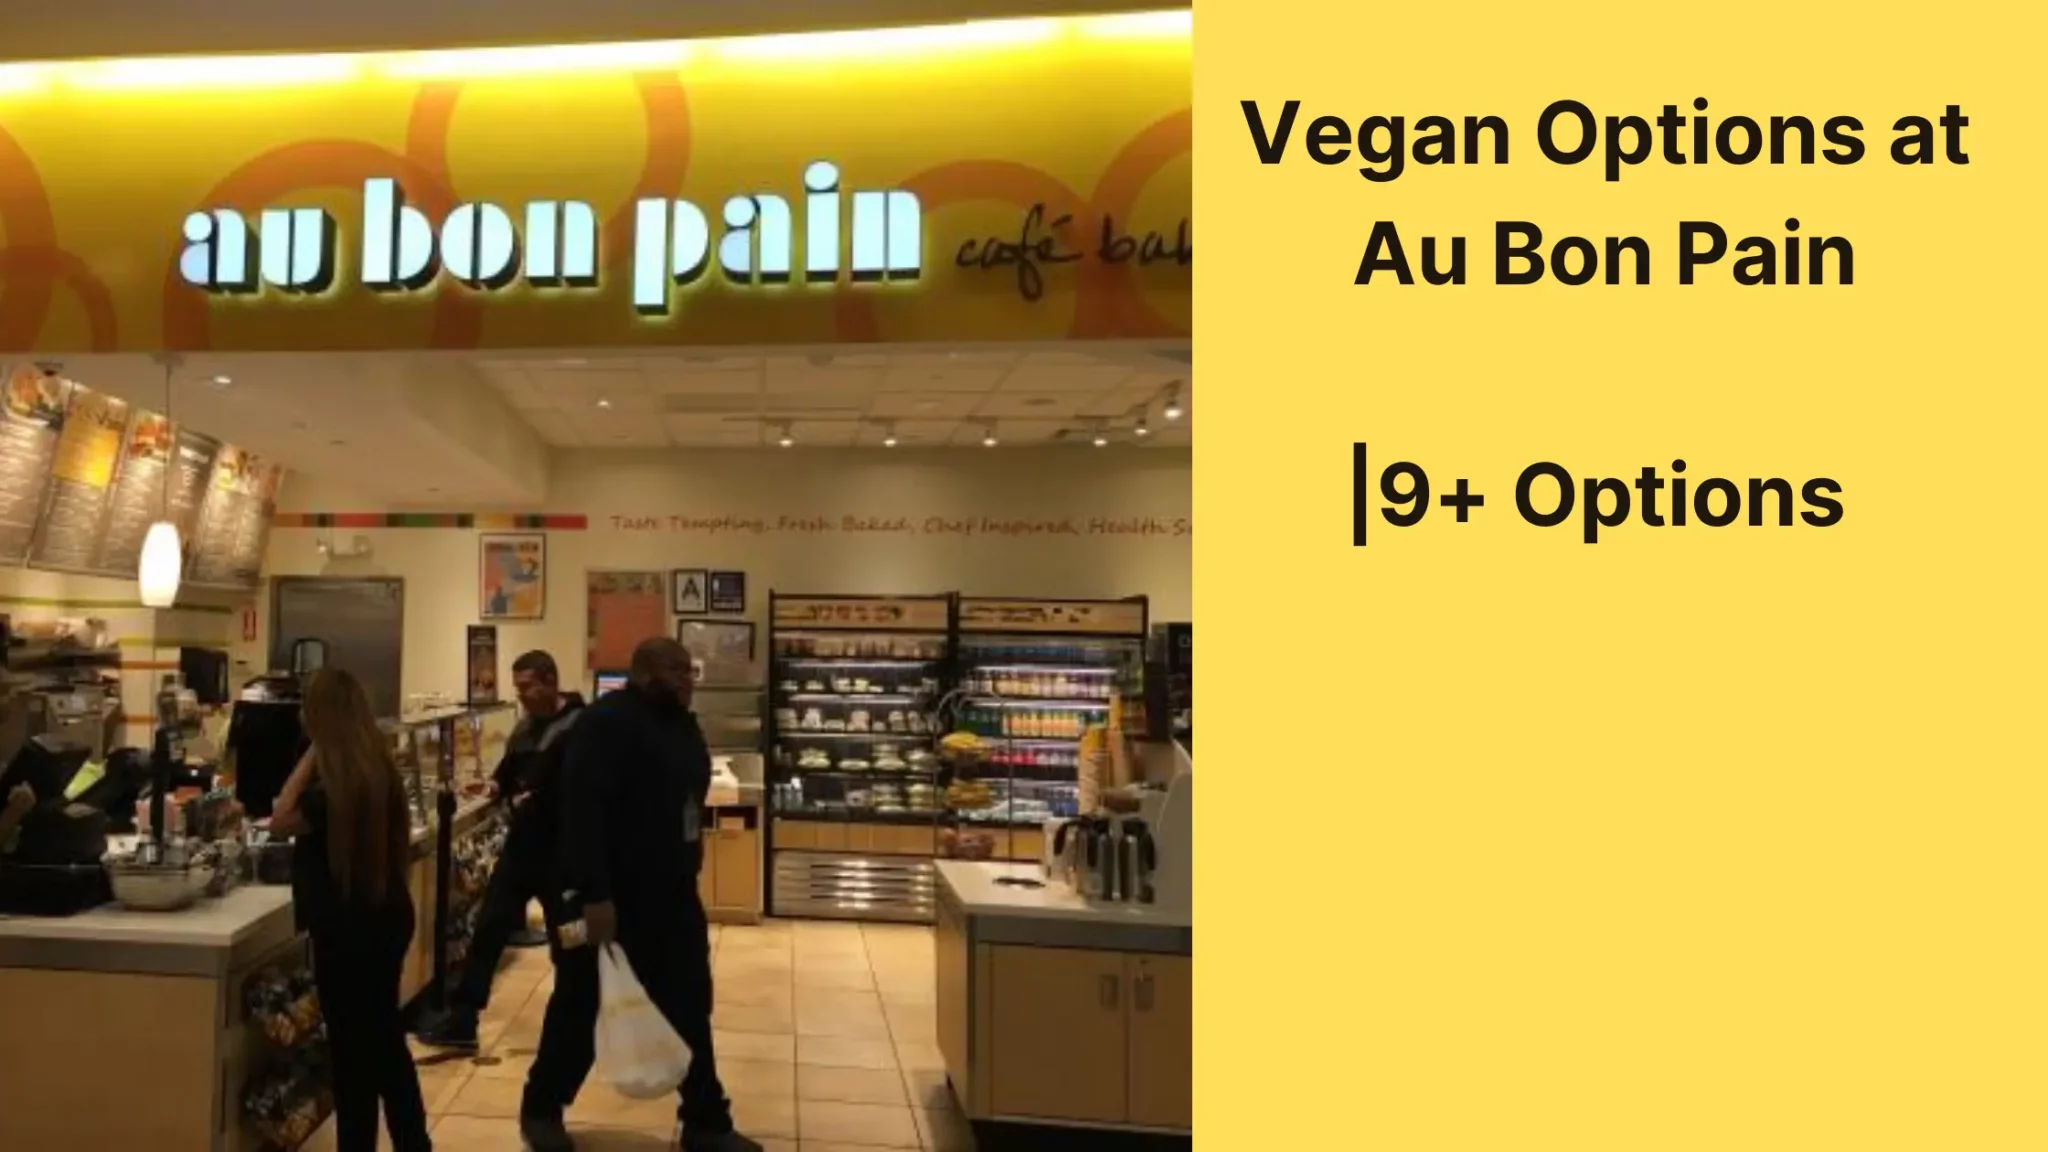 Vegan Options at Au Bon Pain